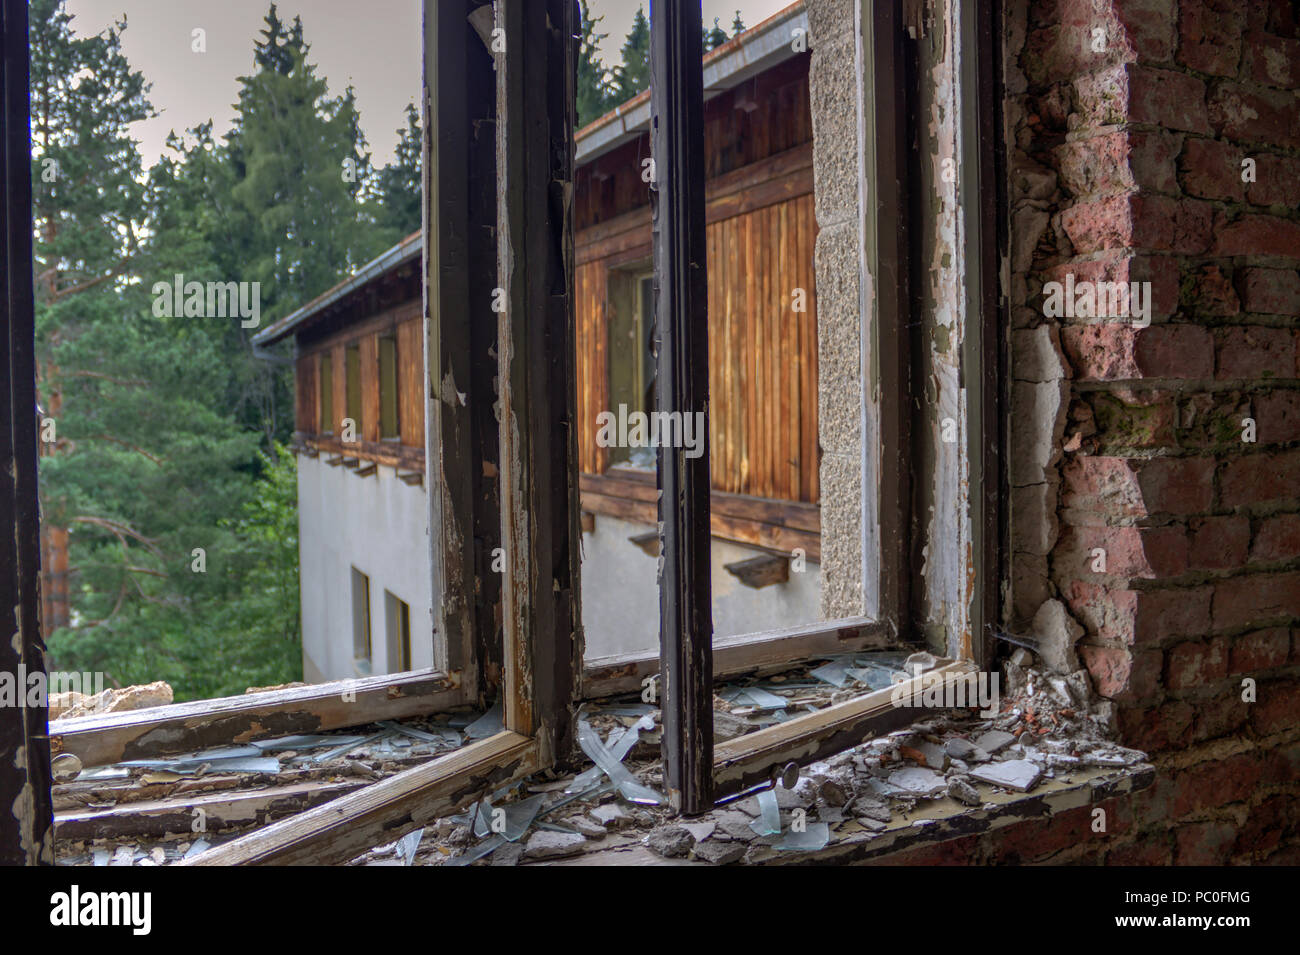 TARA National Park, Western Serbia, July 2018 - Interior of abandoned and decaying Hotel Tara from 1935 Stock Photo